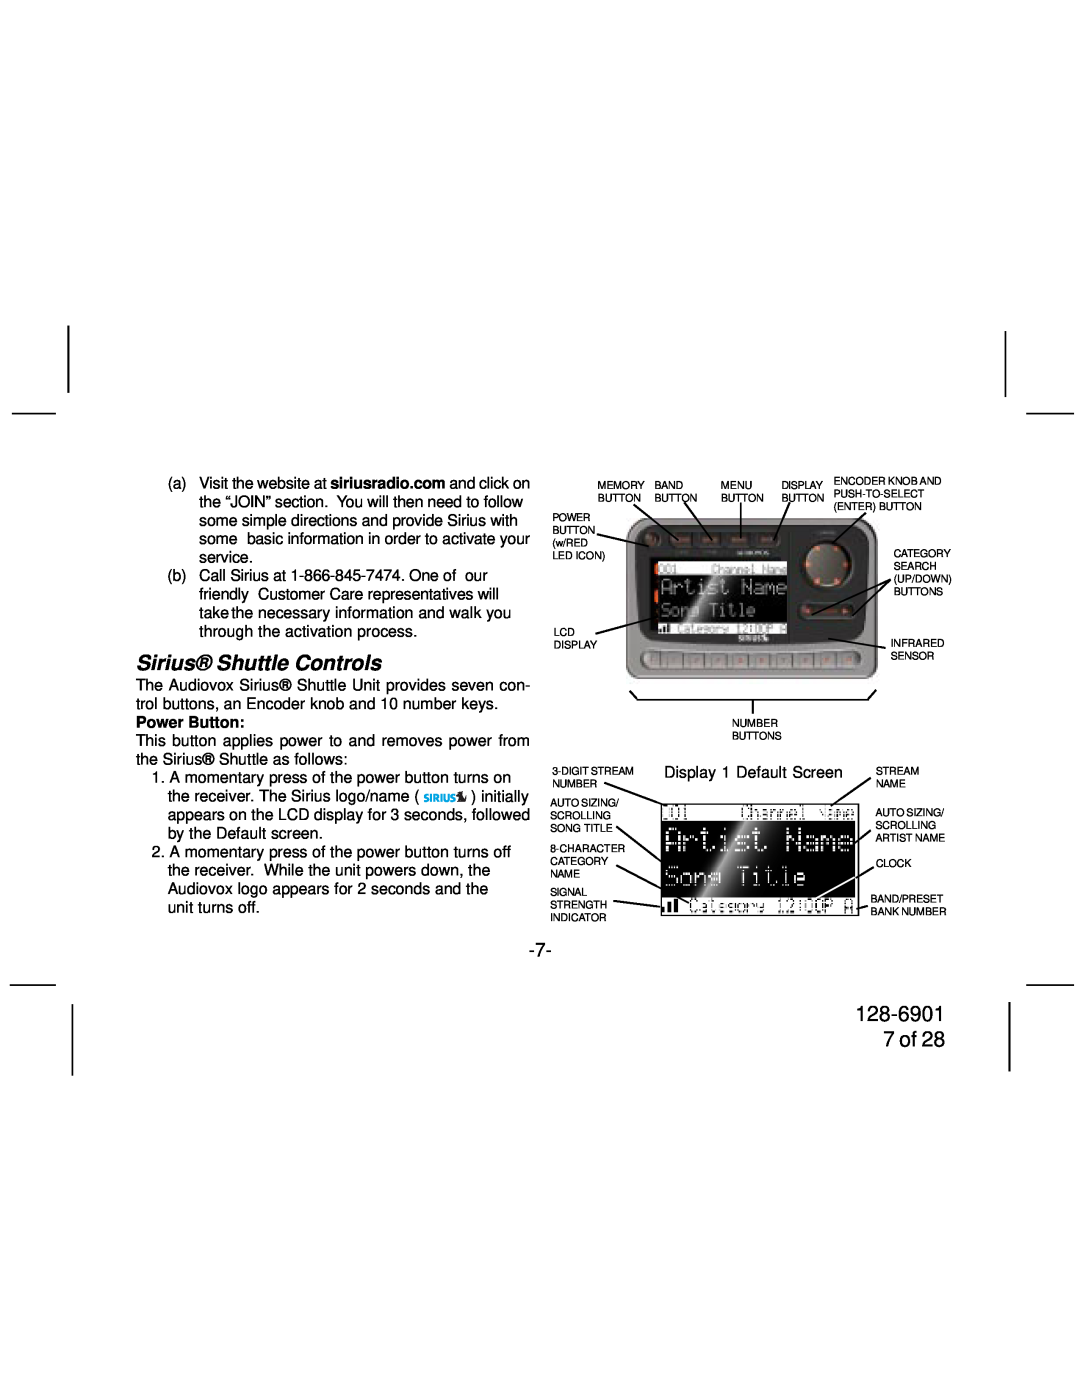 Audiovox SIR-PNP2 manual Sirius Shuttle Controls, 128-6901 7 of, Power Button 